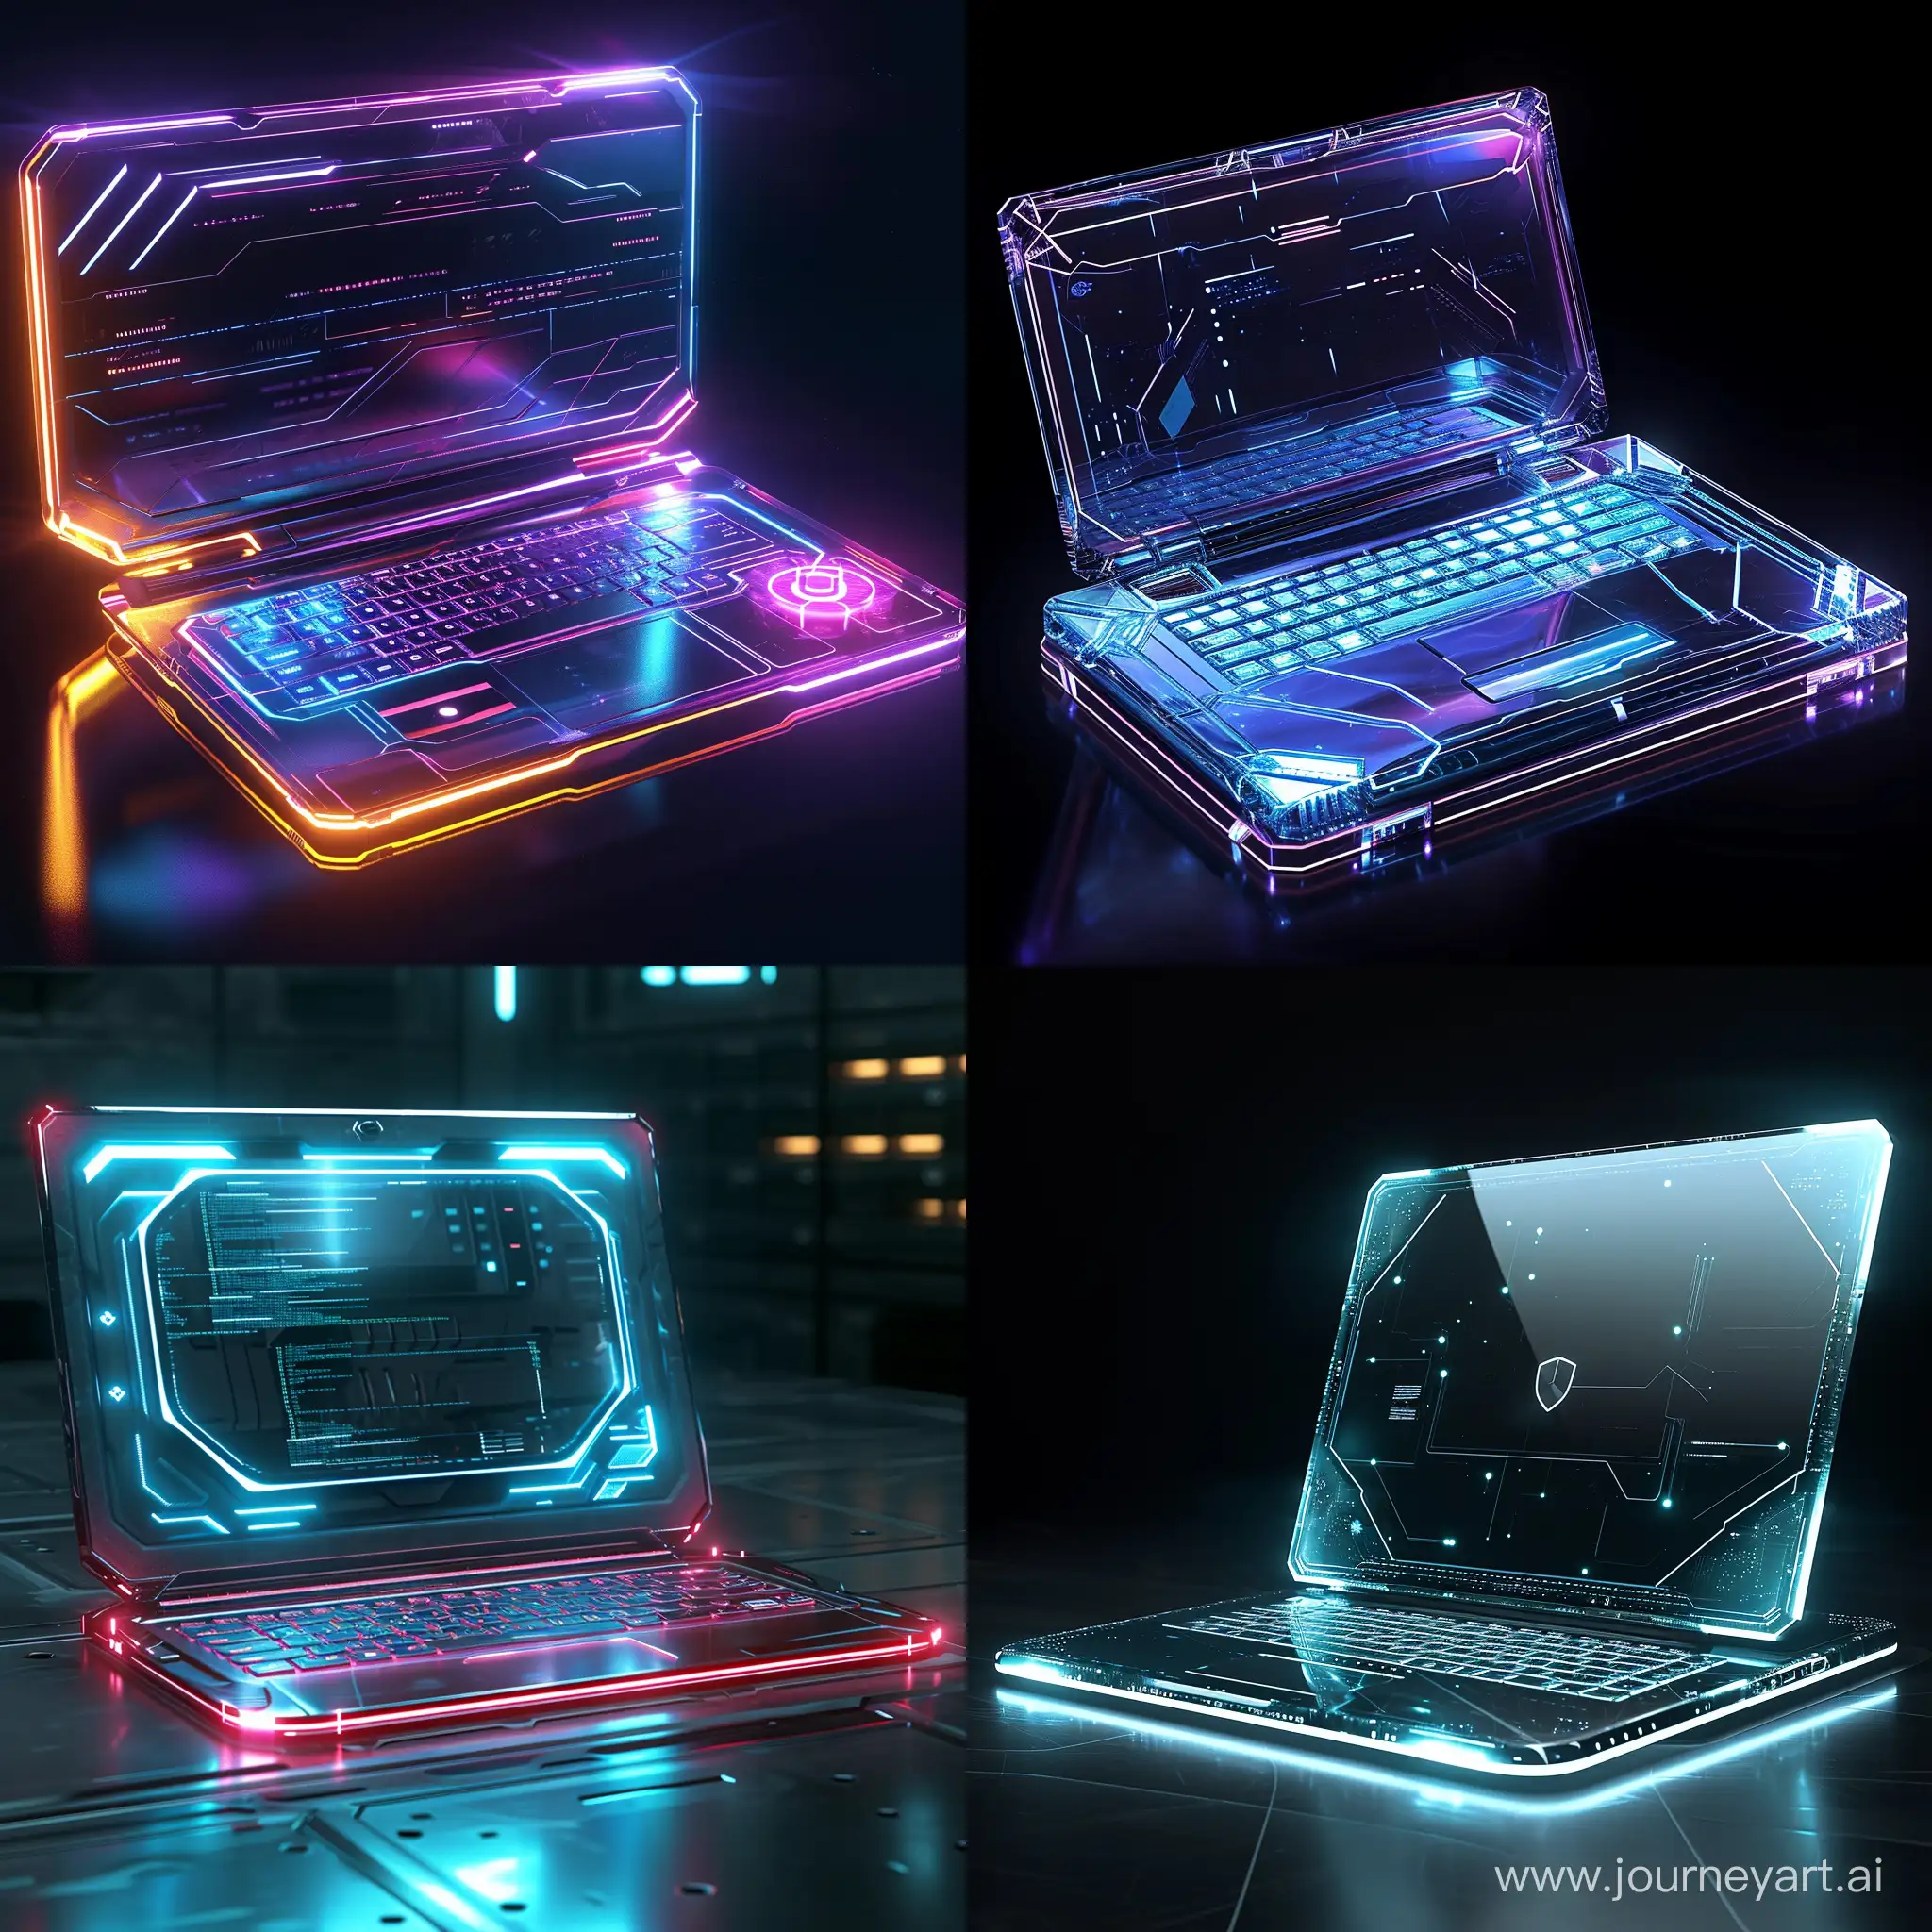 Futuristic-Laptop-in-Ultramodern-2020s-Style-Top-Trending-Art